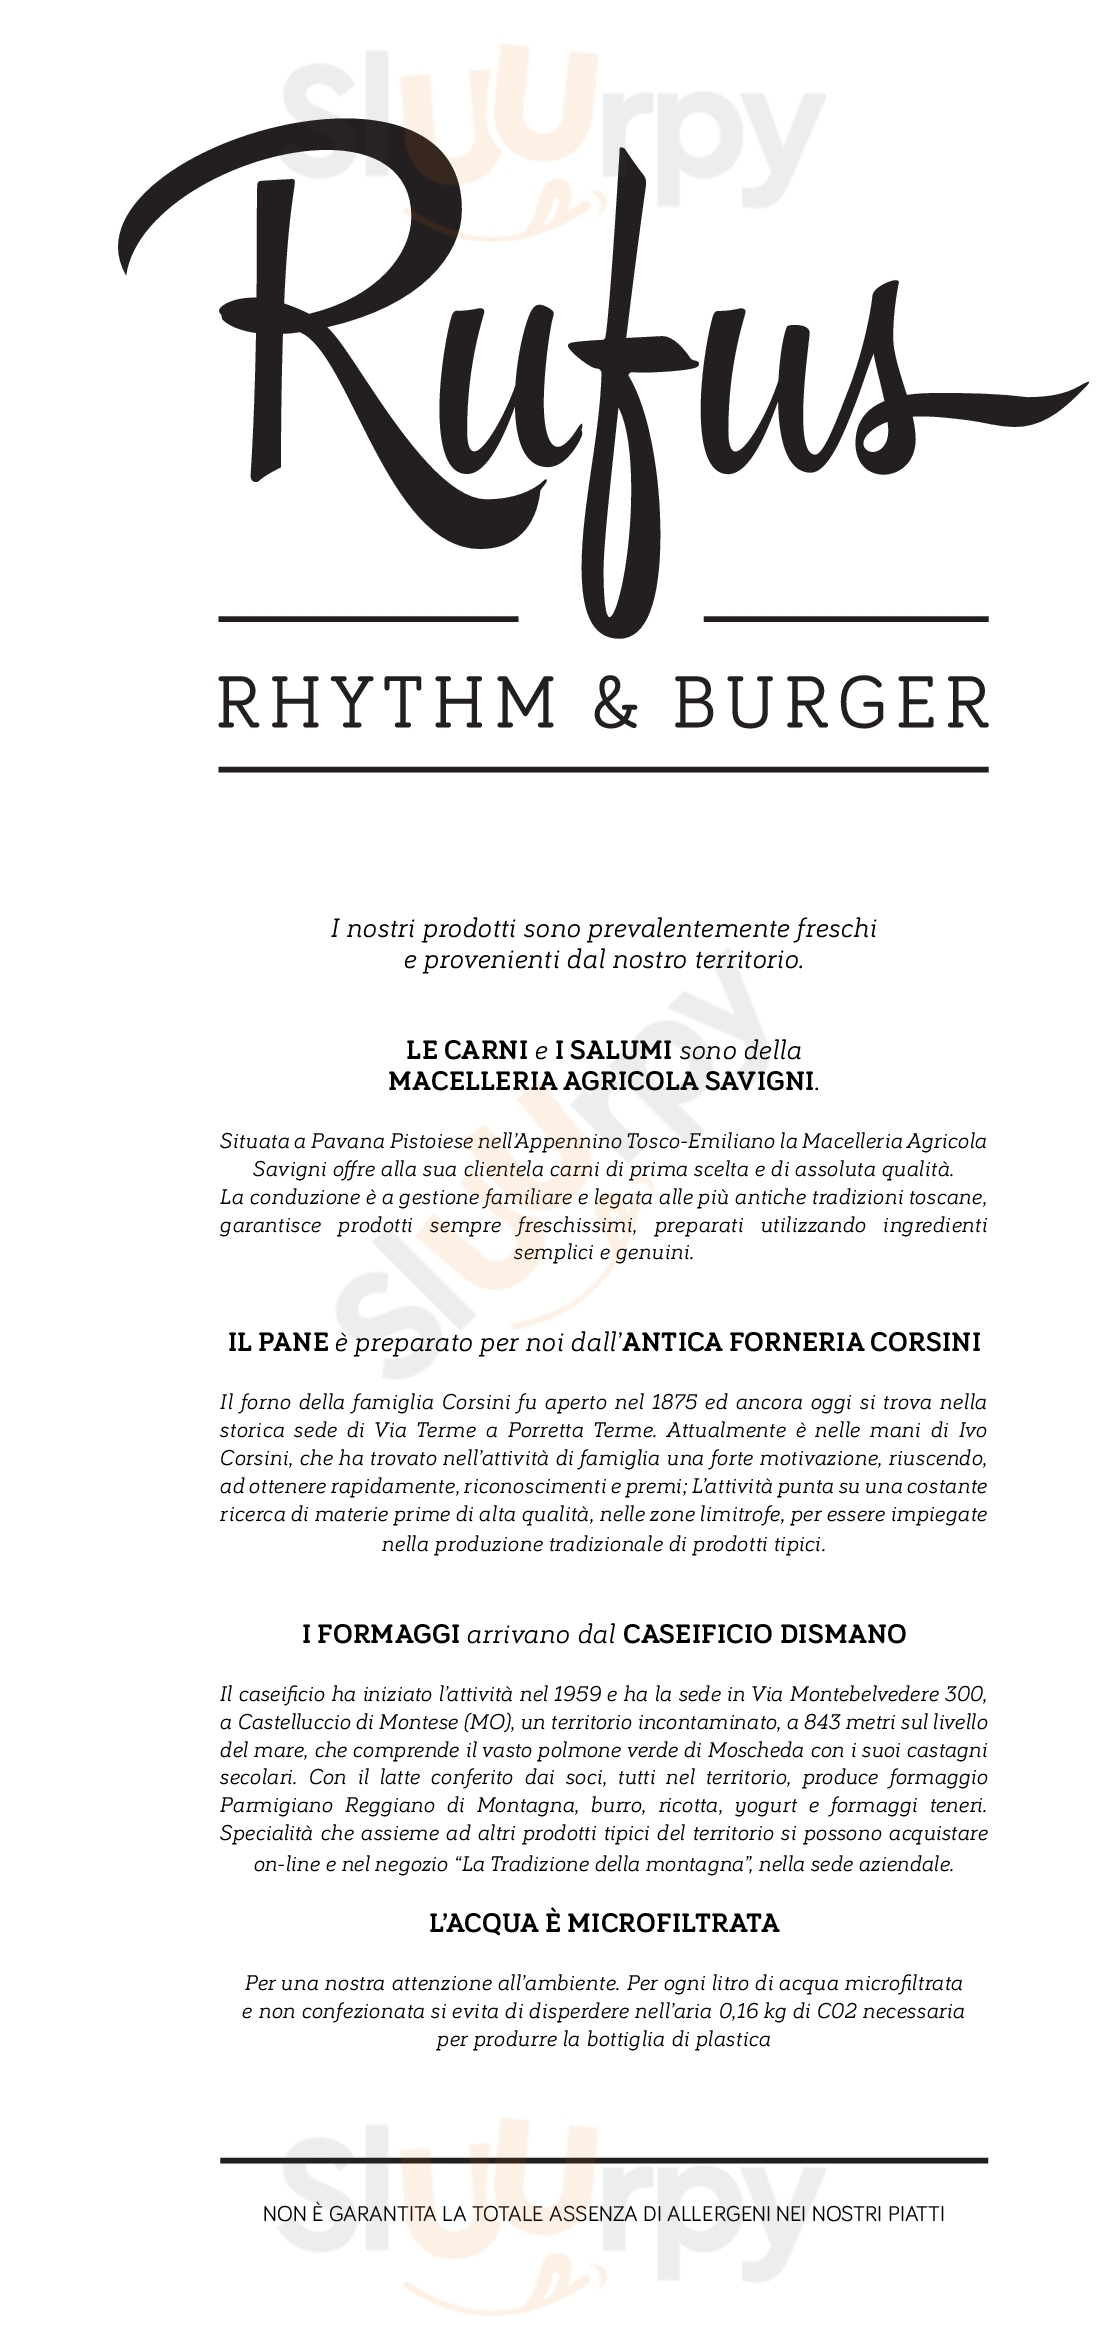 RUFUS rhythm & burger Porretta Terme menù 1 pagina